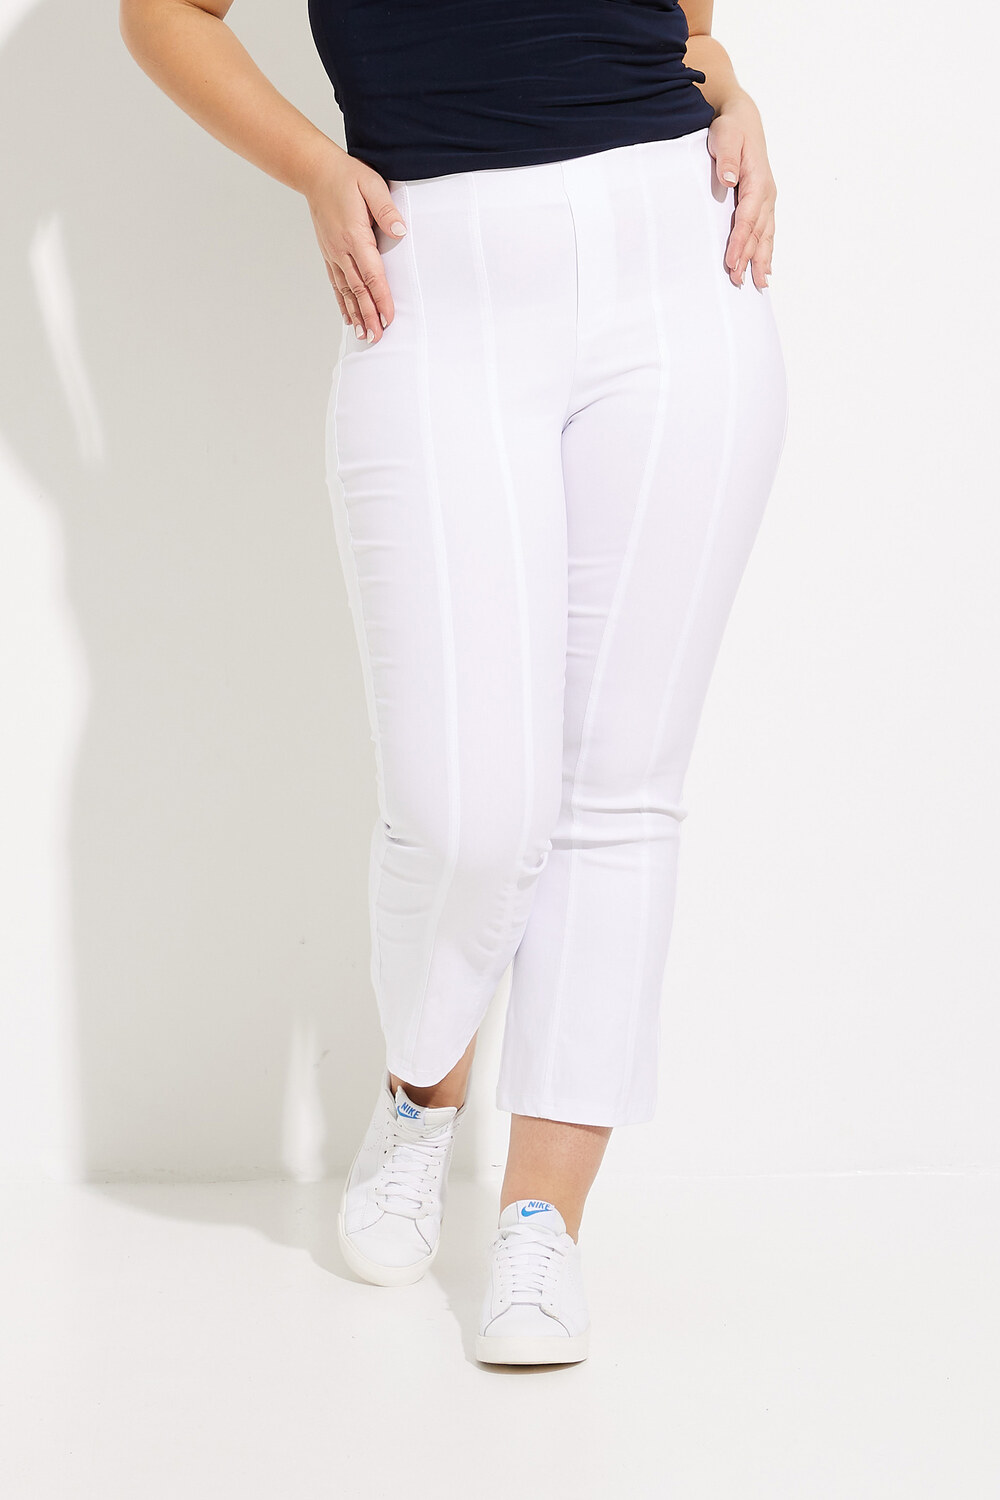 Pantalon en tissu millenium modèle 232233. Blanc